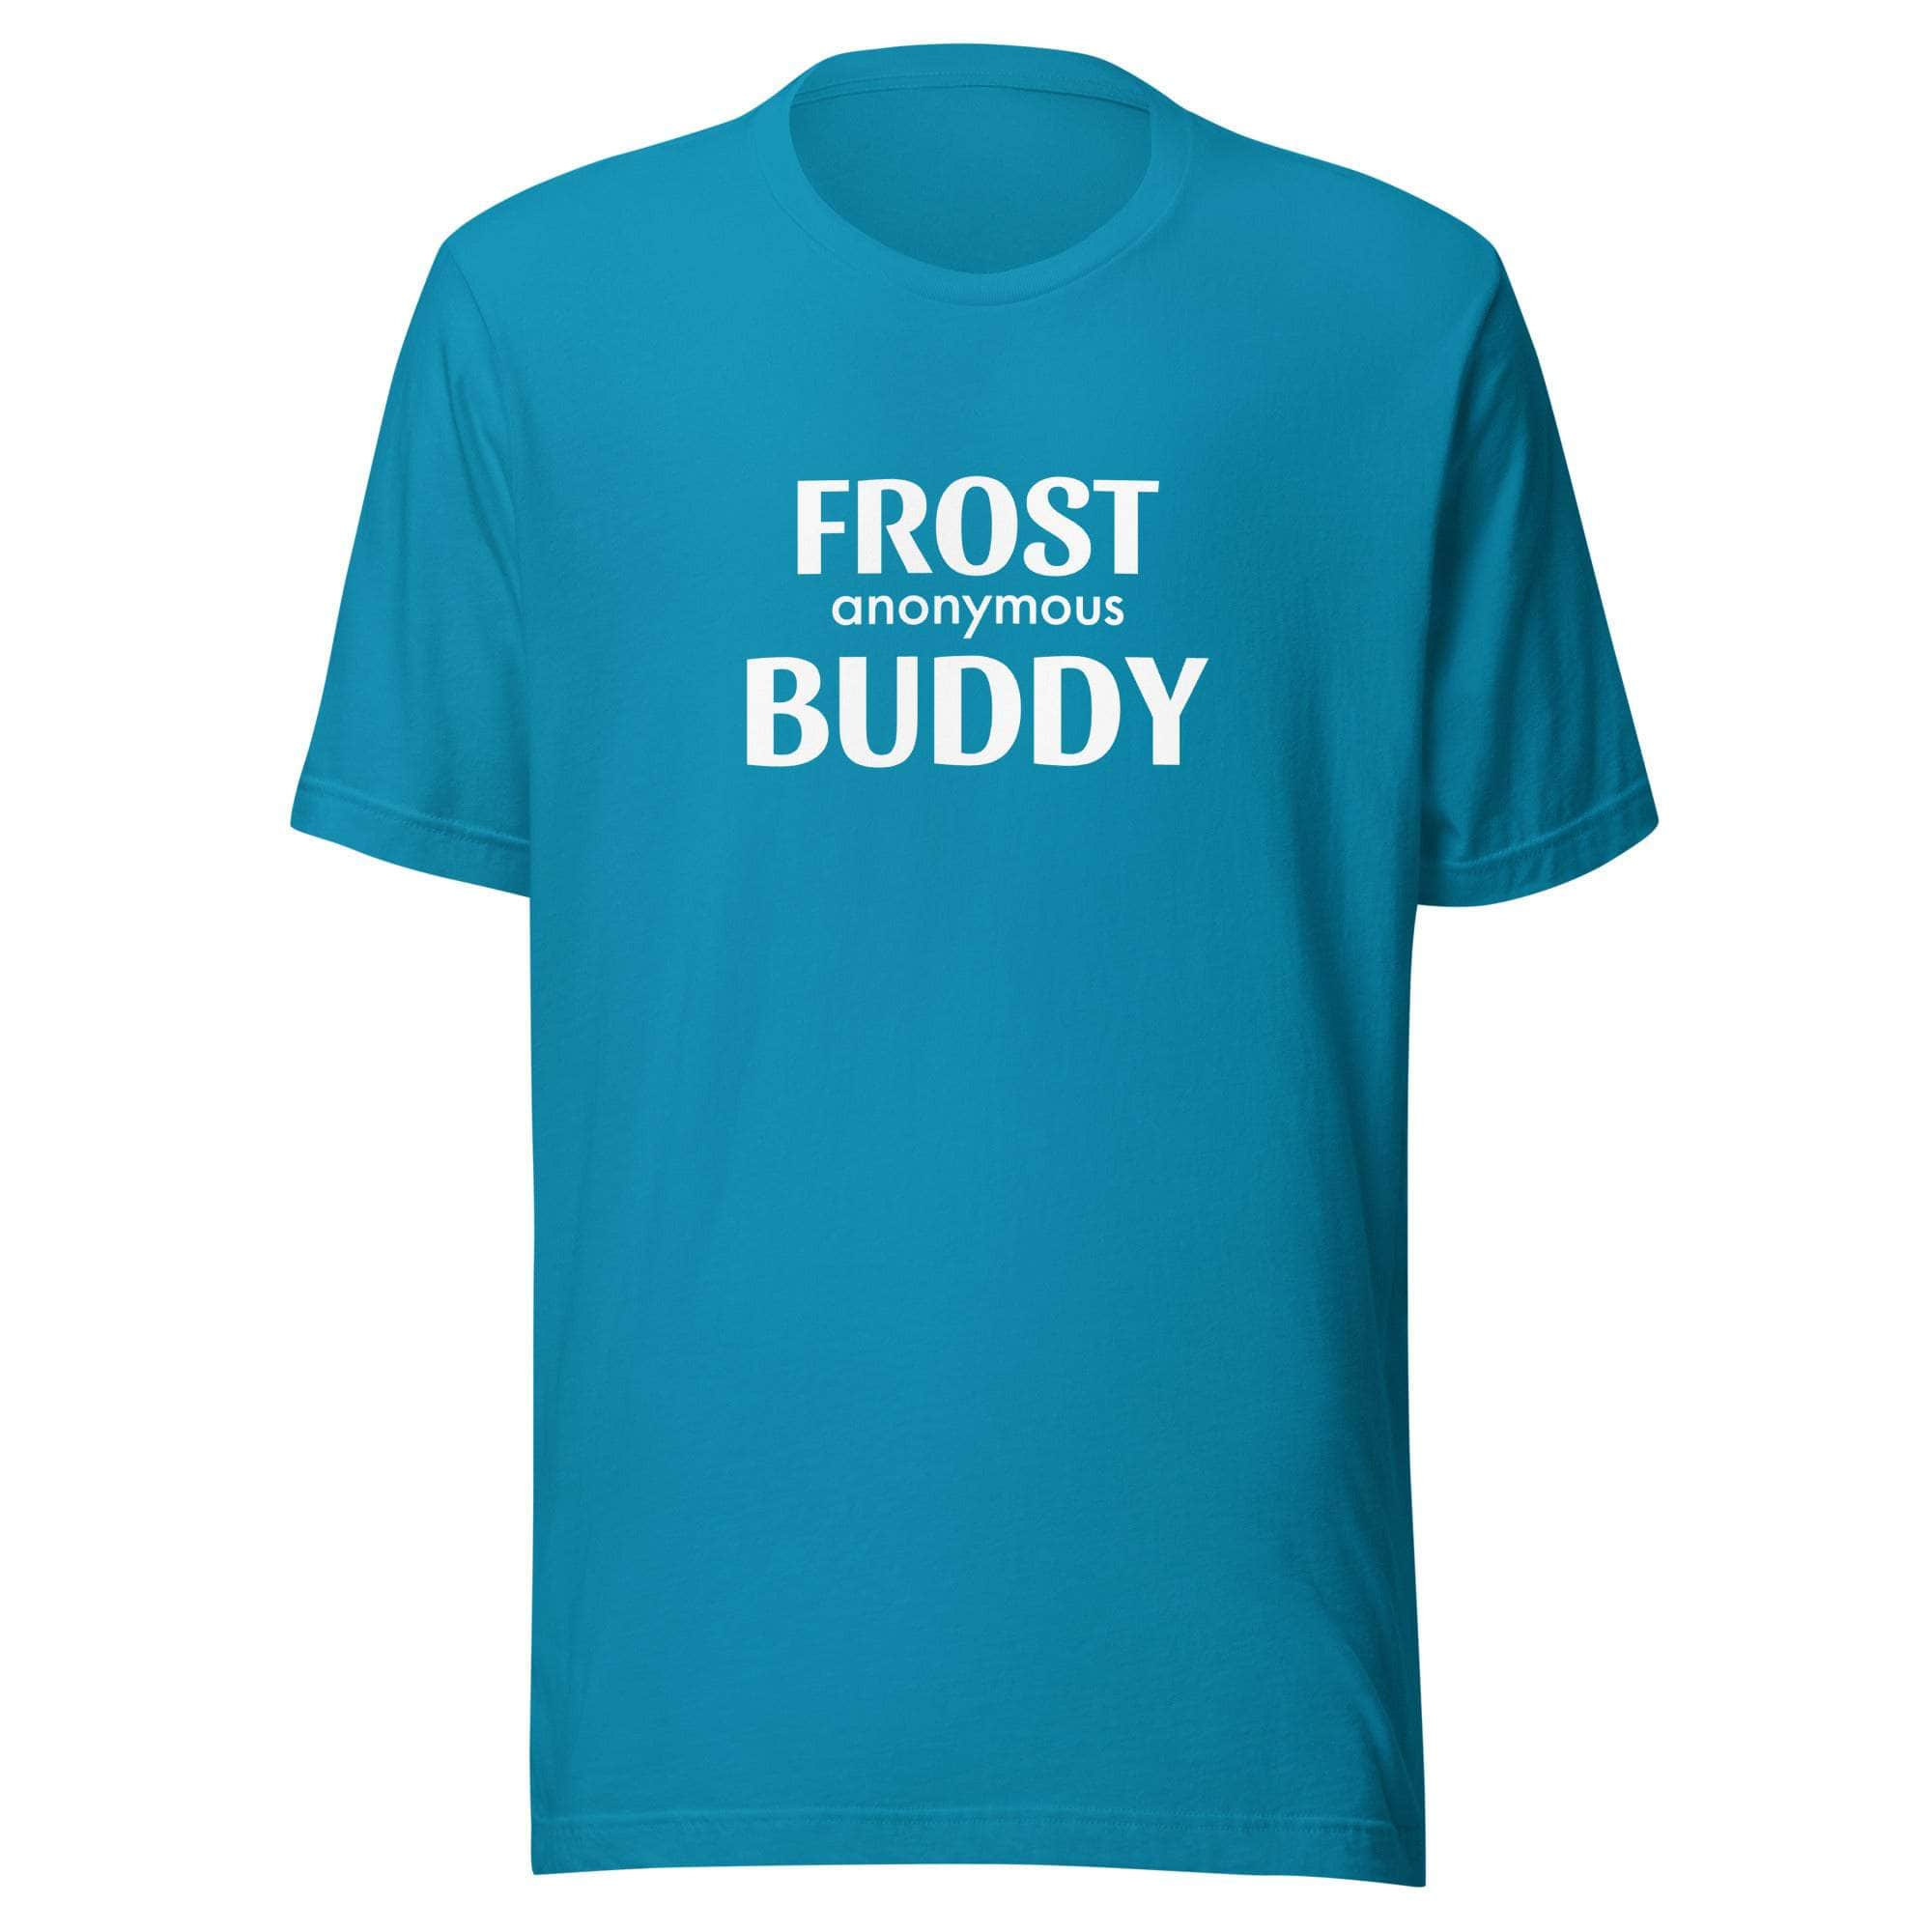 Frost Buddy  Aqua / S Frost Buddy Anonymous Unisex T-shirt